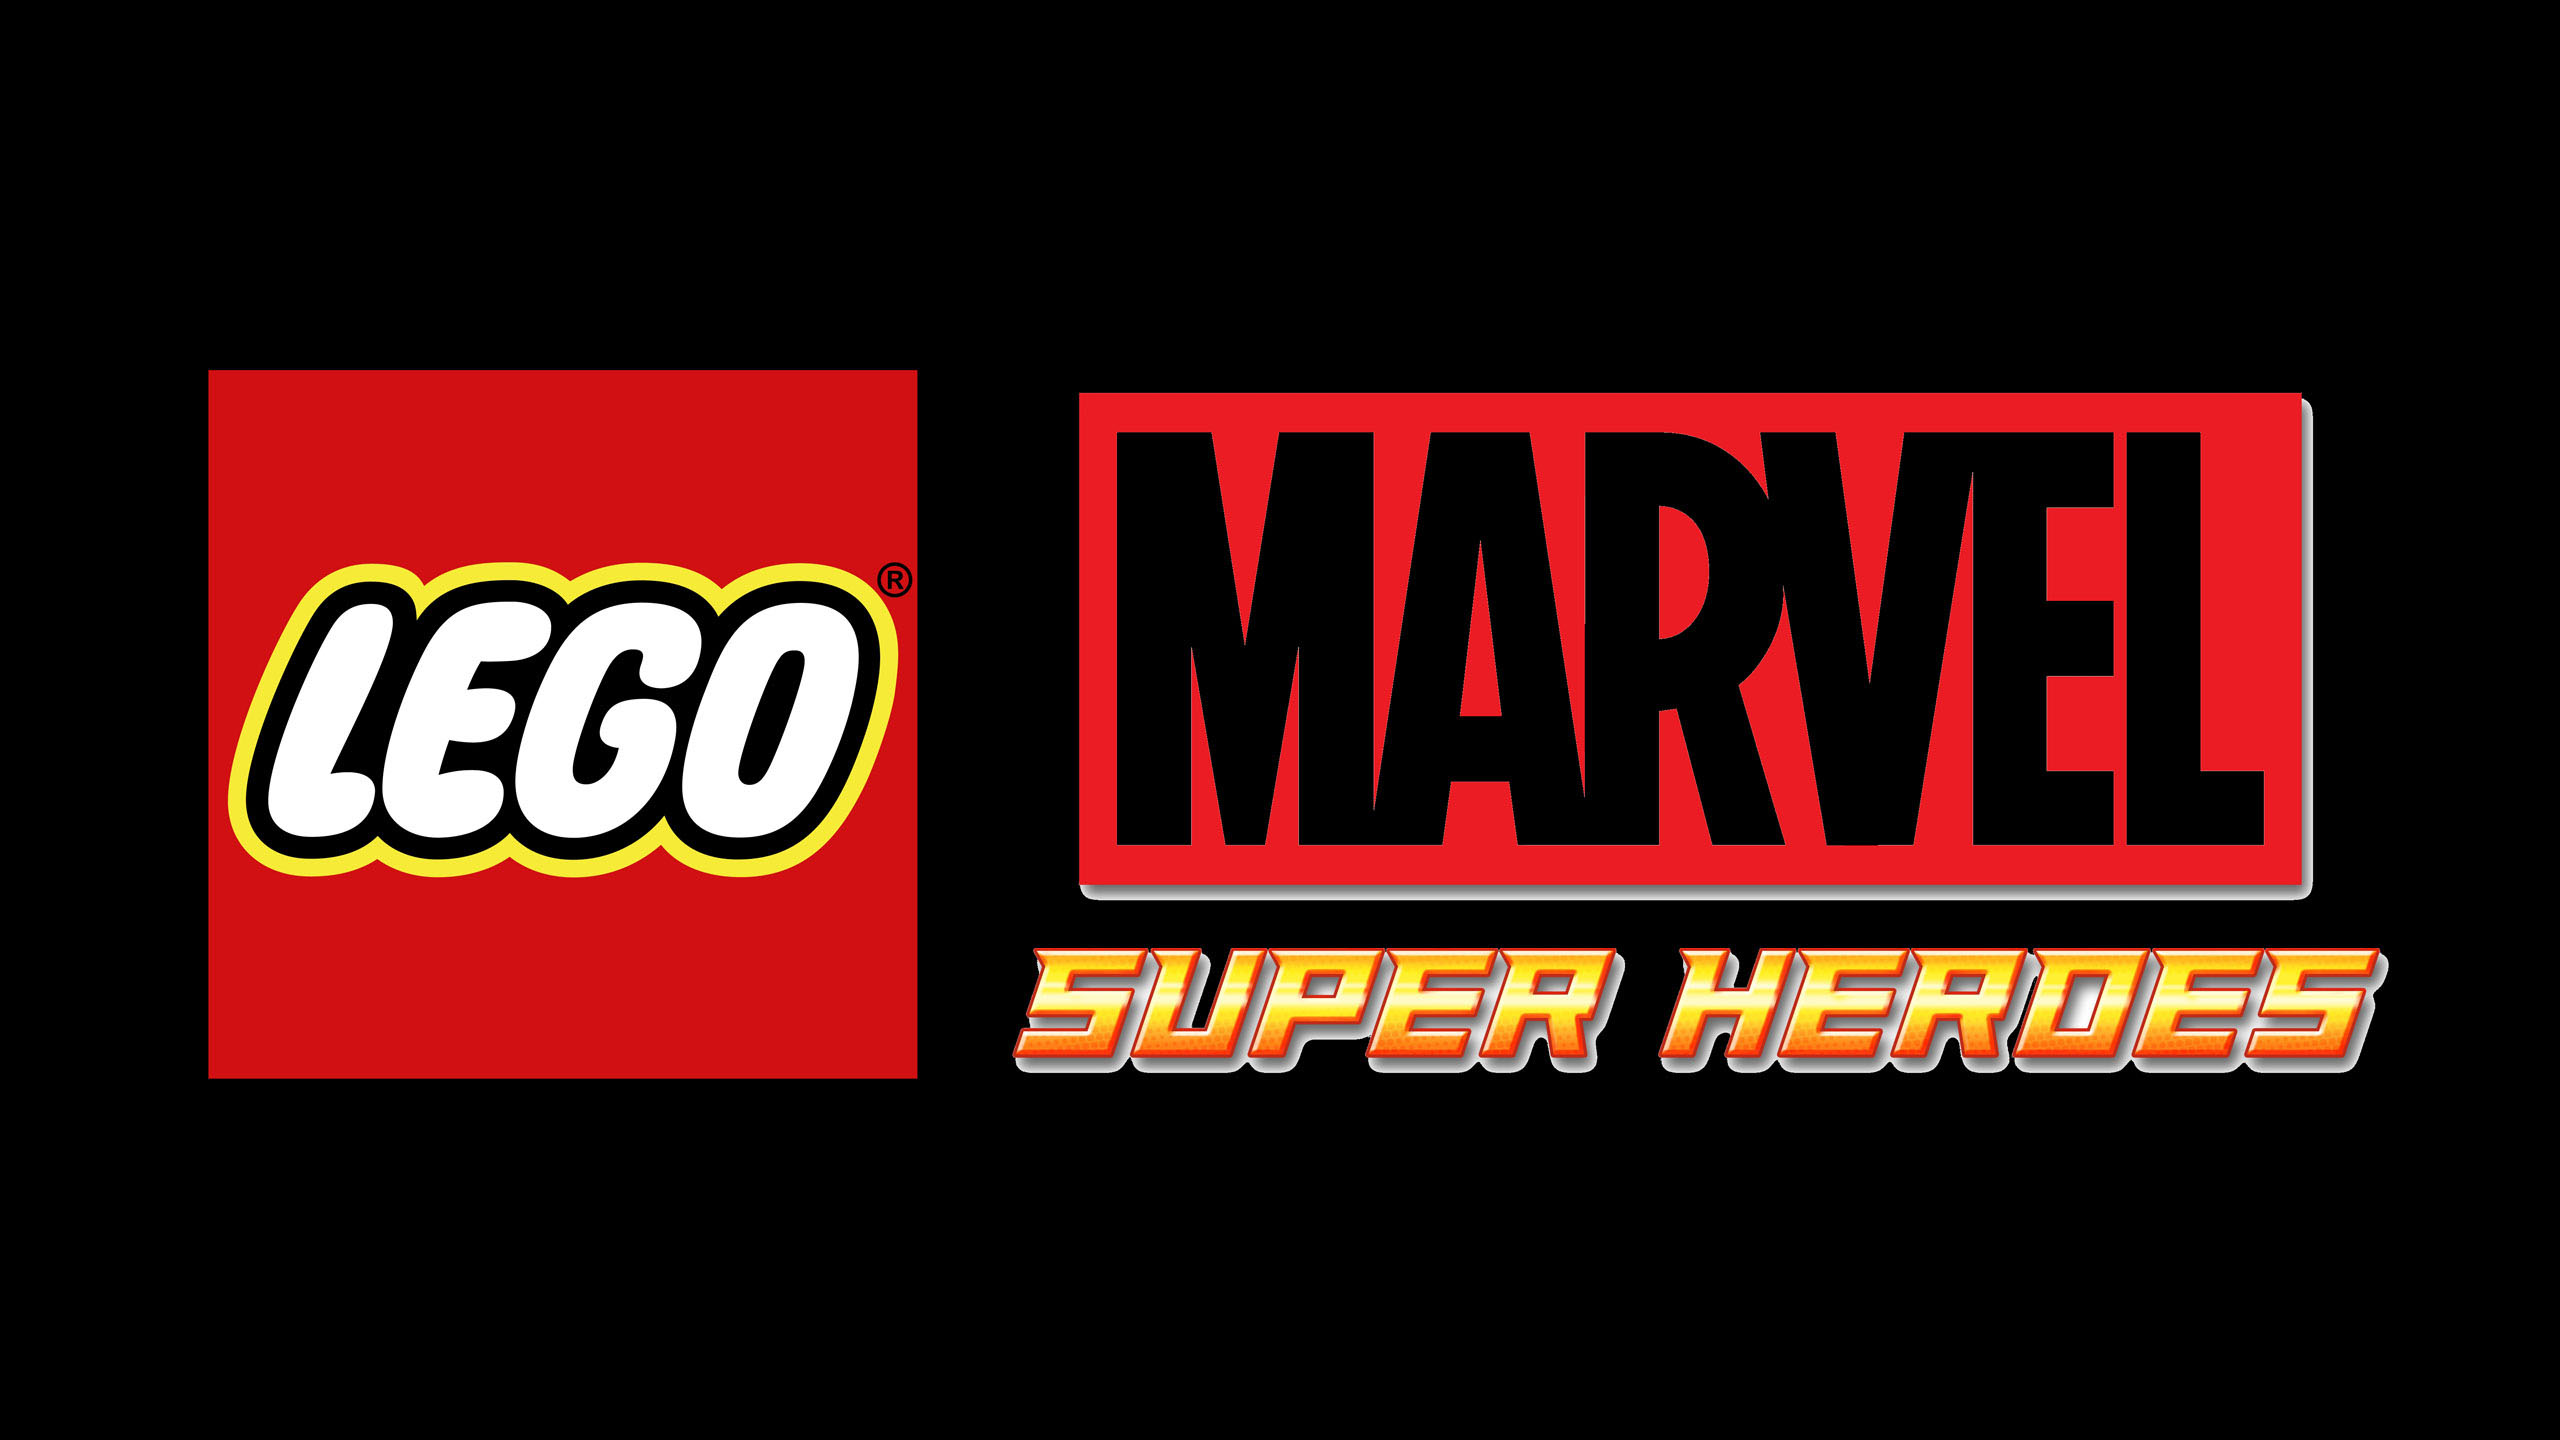 Lego Marvel Super Heroes Logo Wallpaper On Wallpapermade